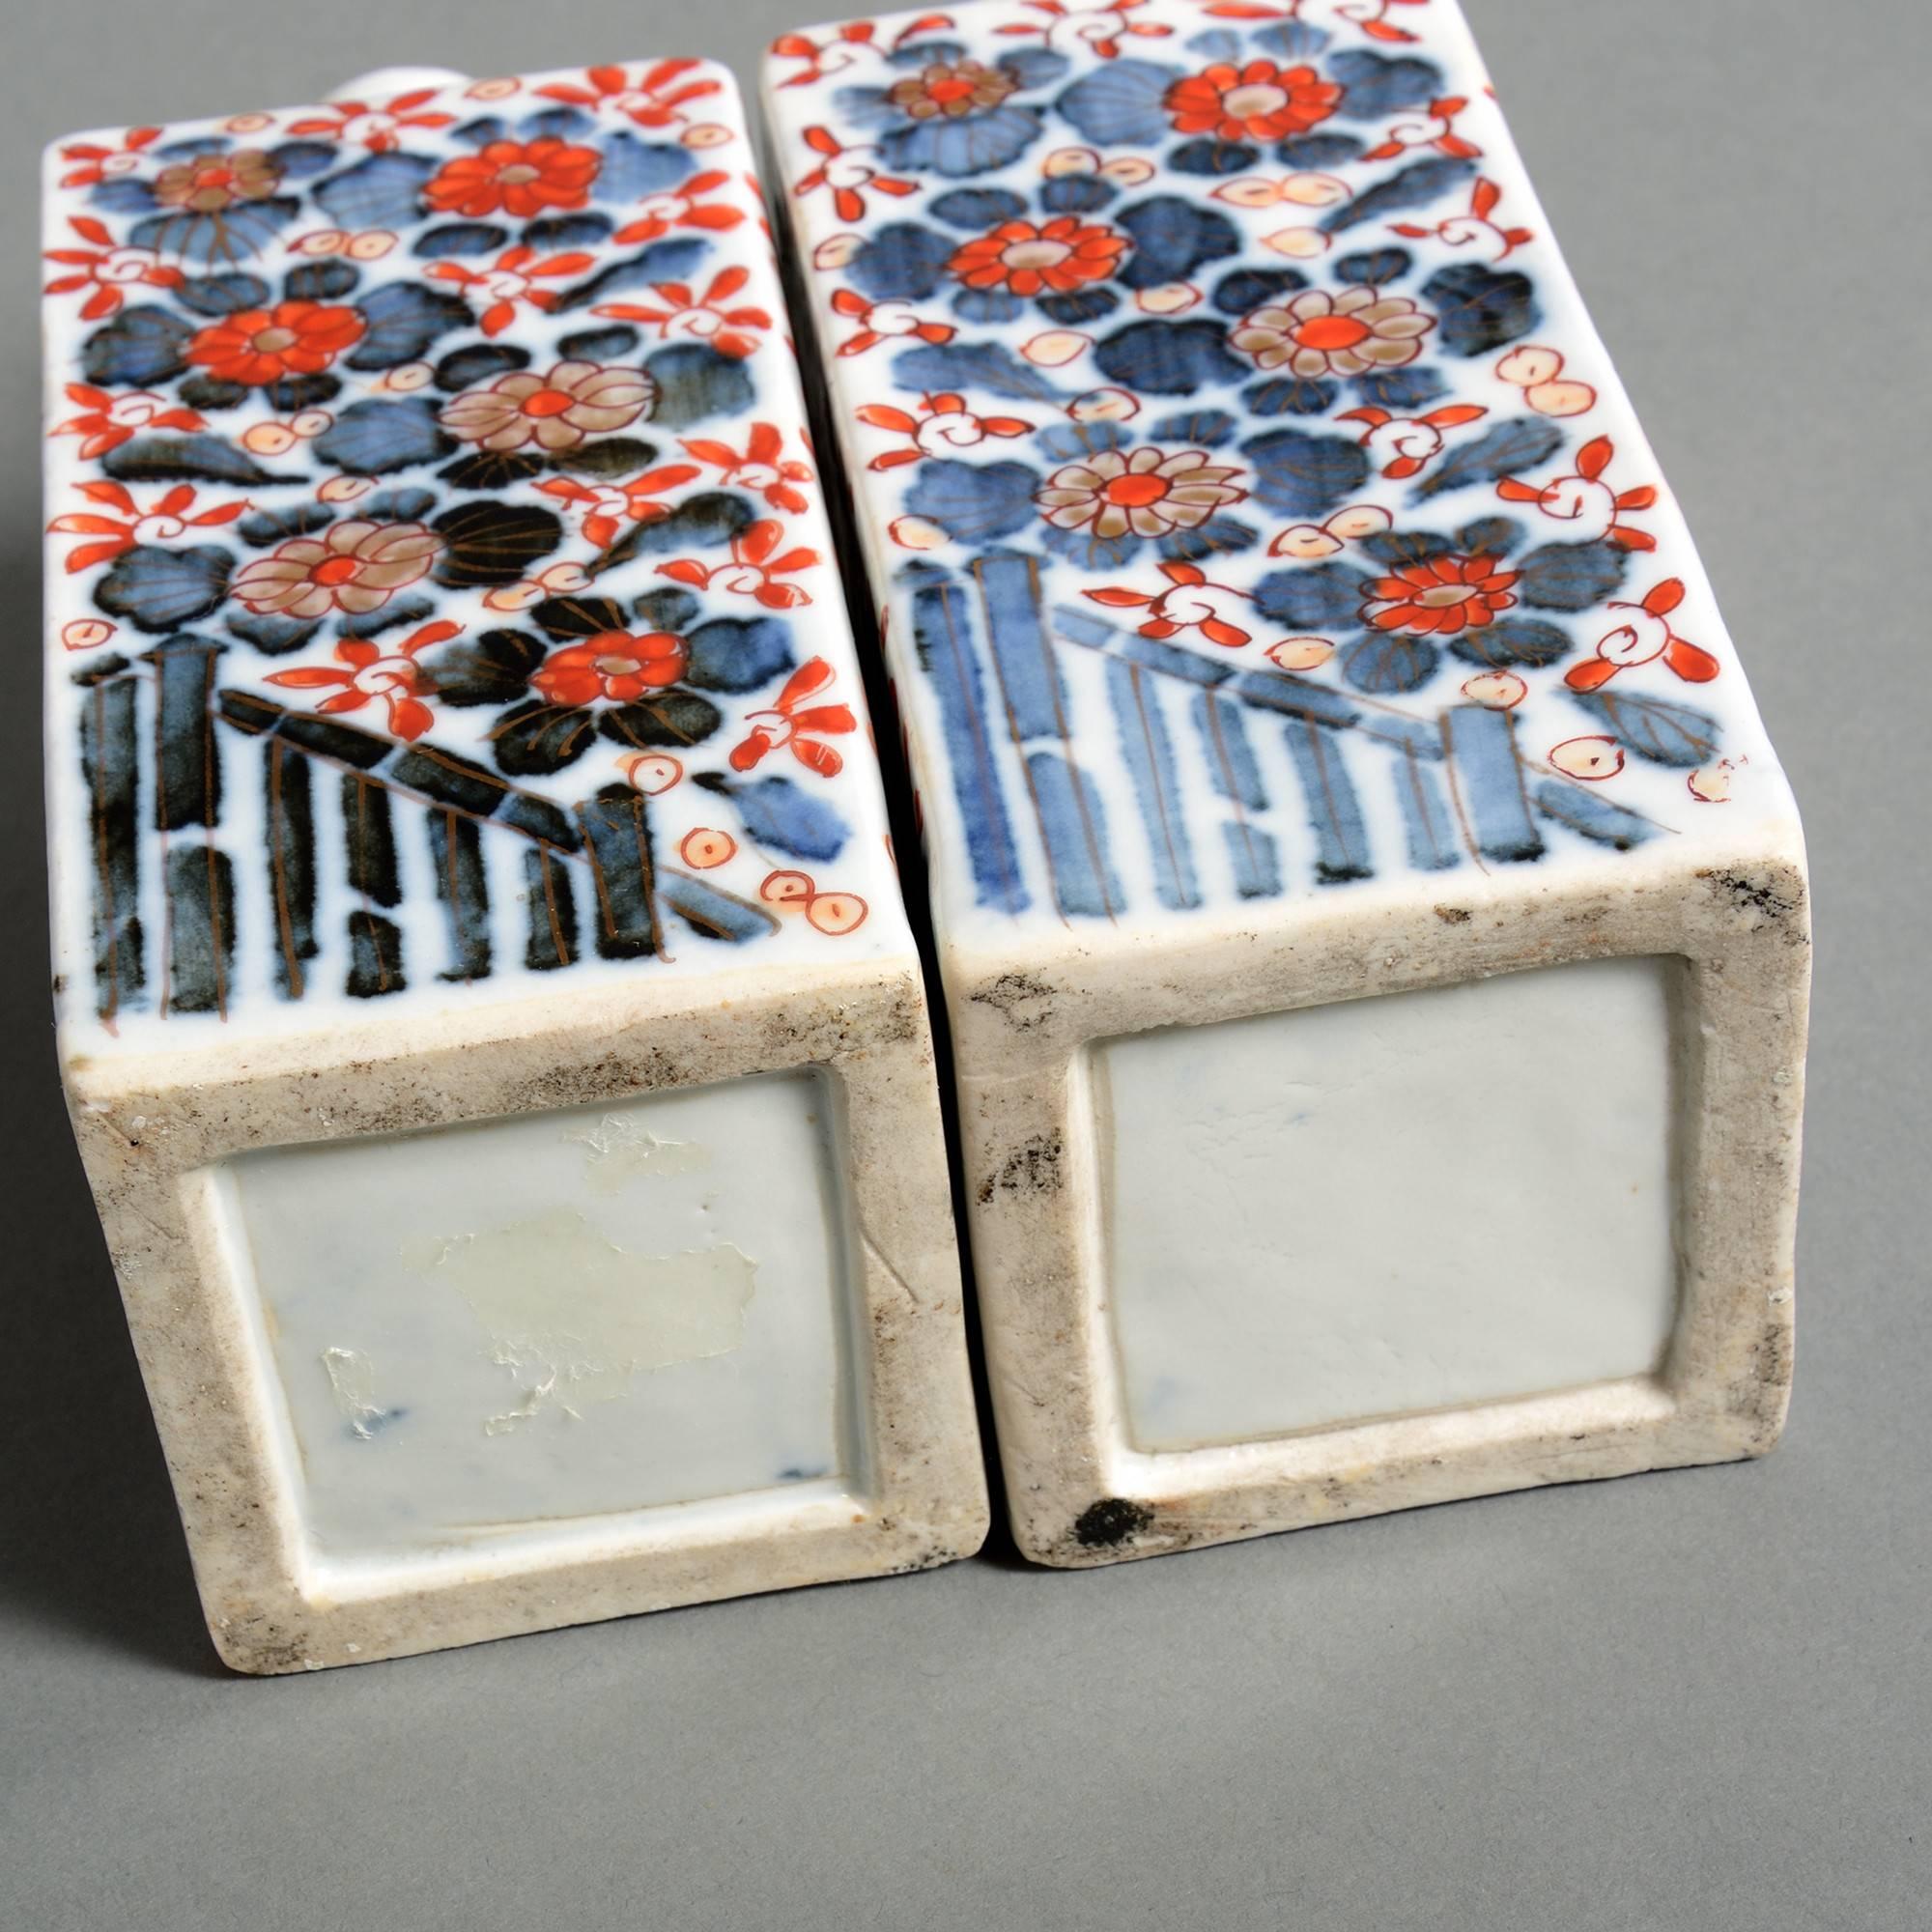 Japanese 19th Century White Imari Porcelain Flasks / Vases Pair with Blue & Red Flowers